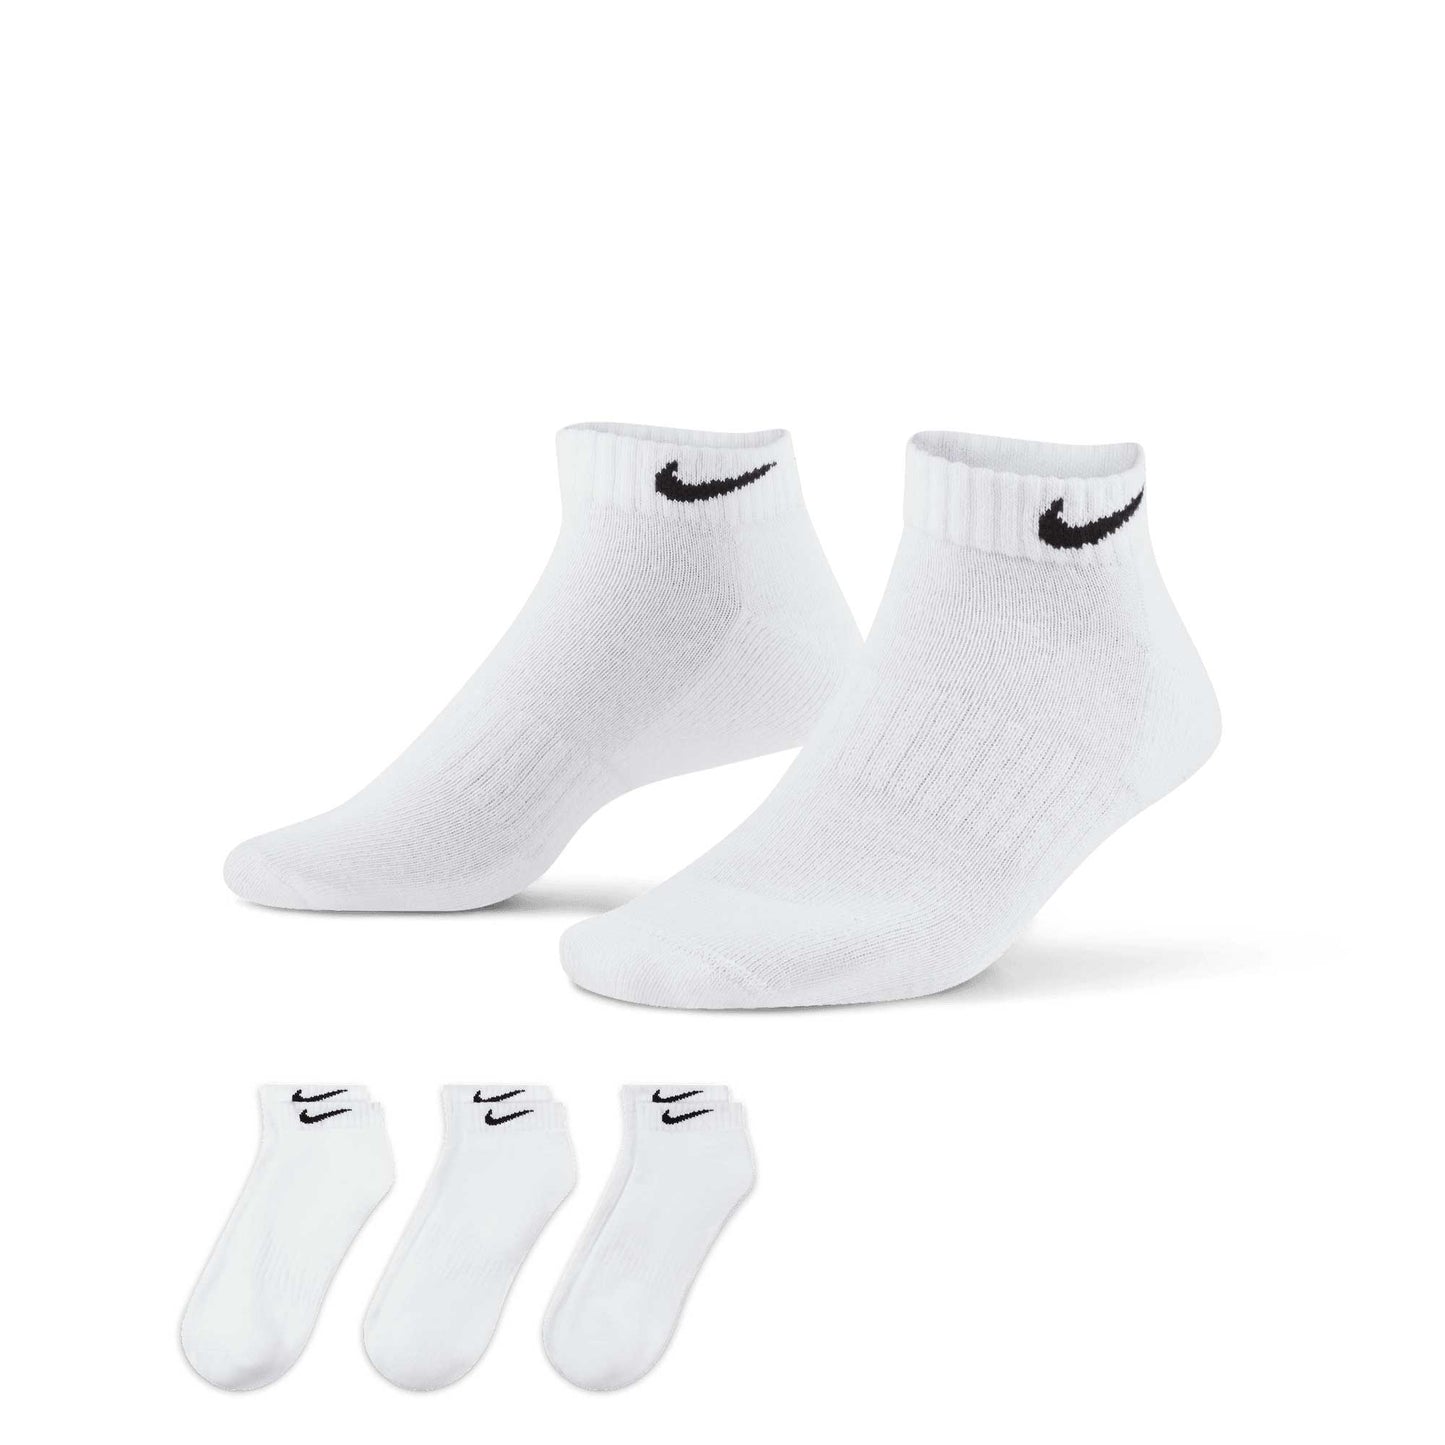 Nike SB Nike Everyday Cushioned Socks (3-Pack), white/black, white/black - Tiki Room Skateboards - 3